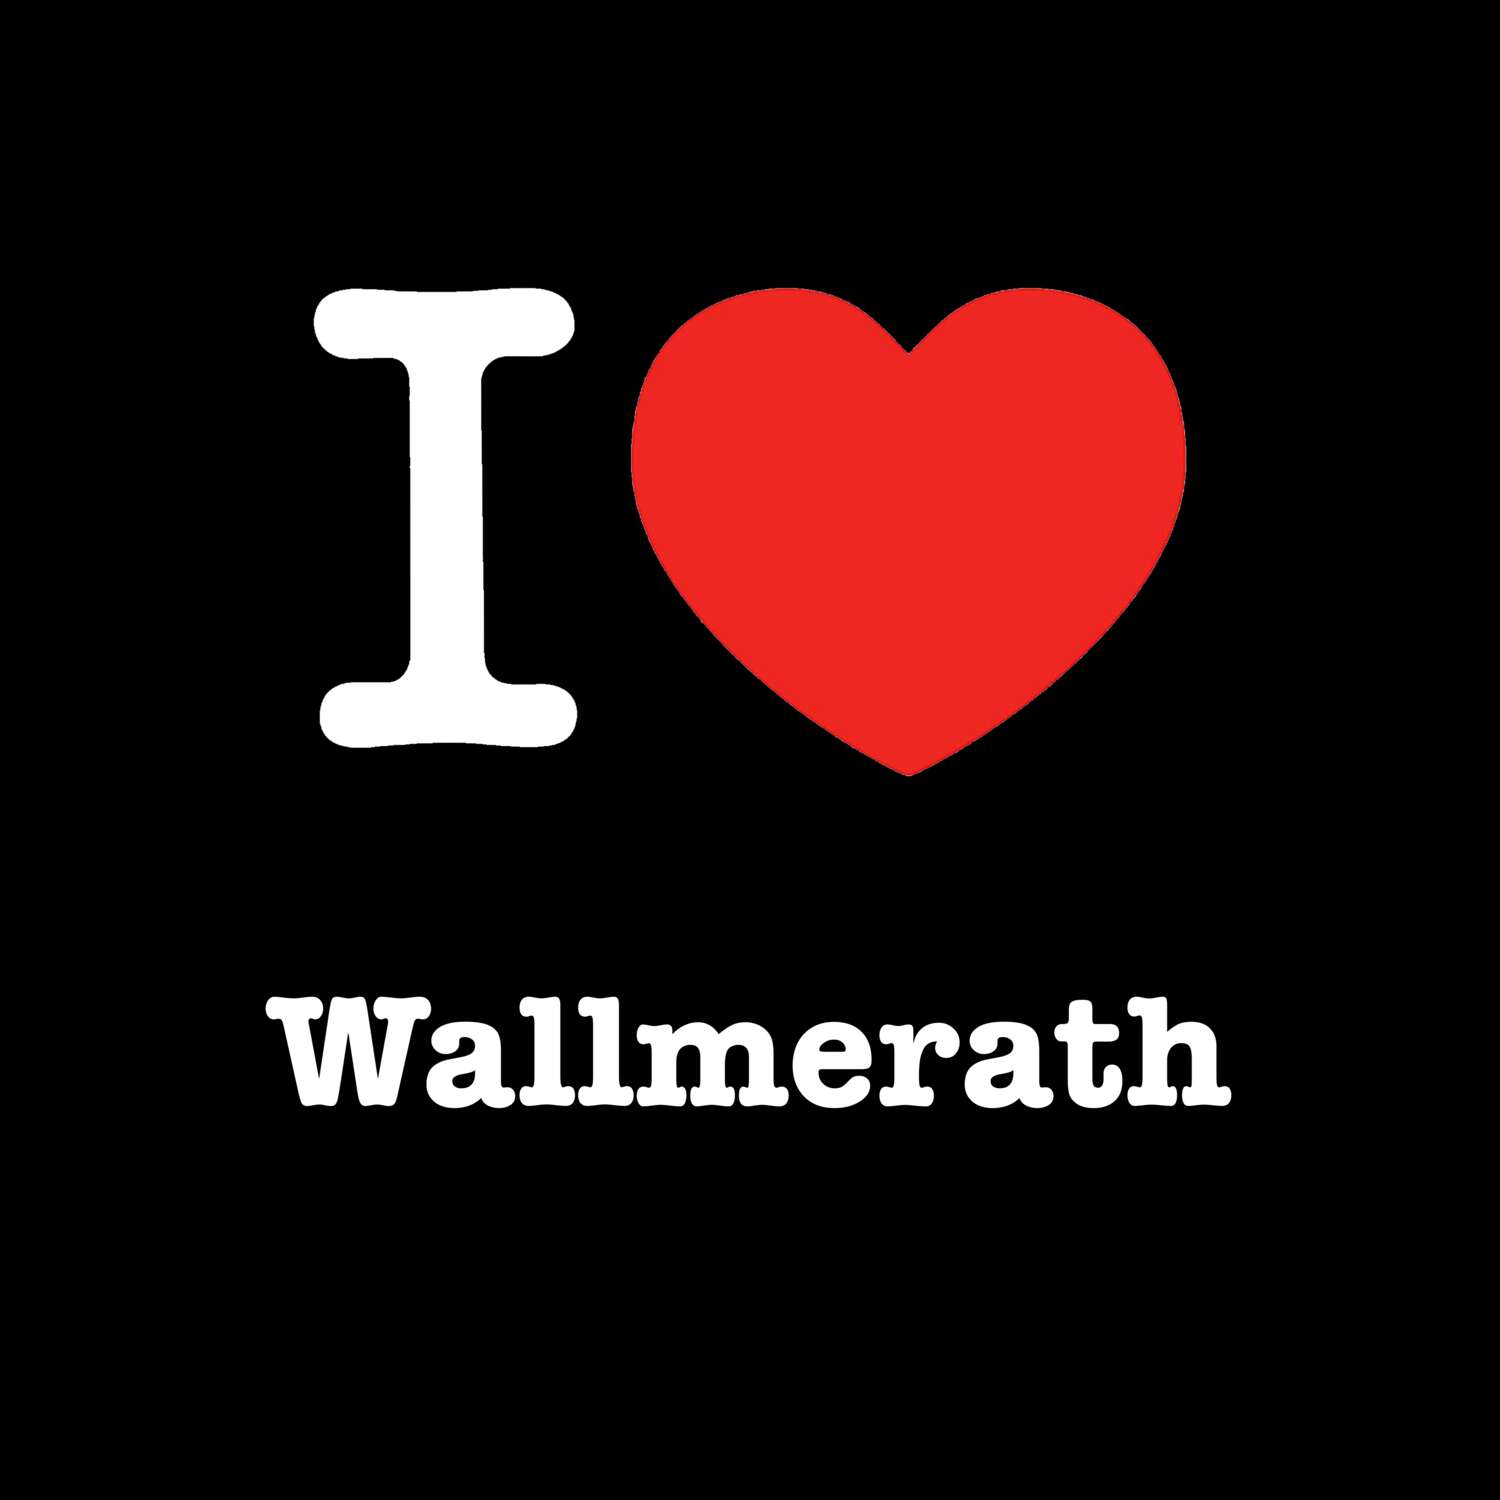 Wallmerath T-Shirt »I love«